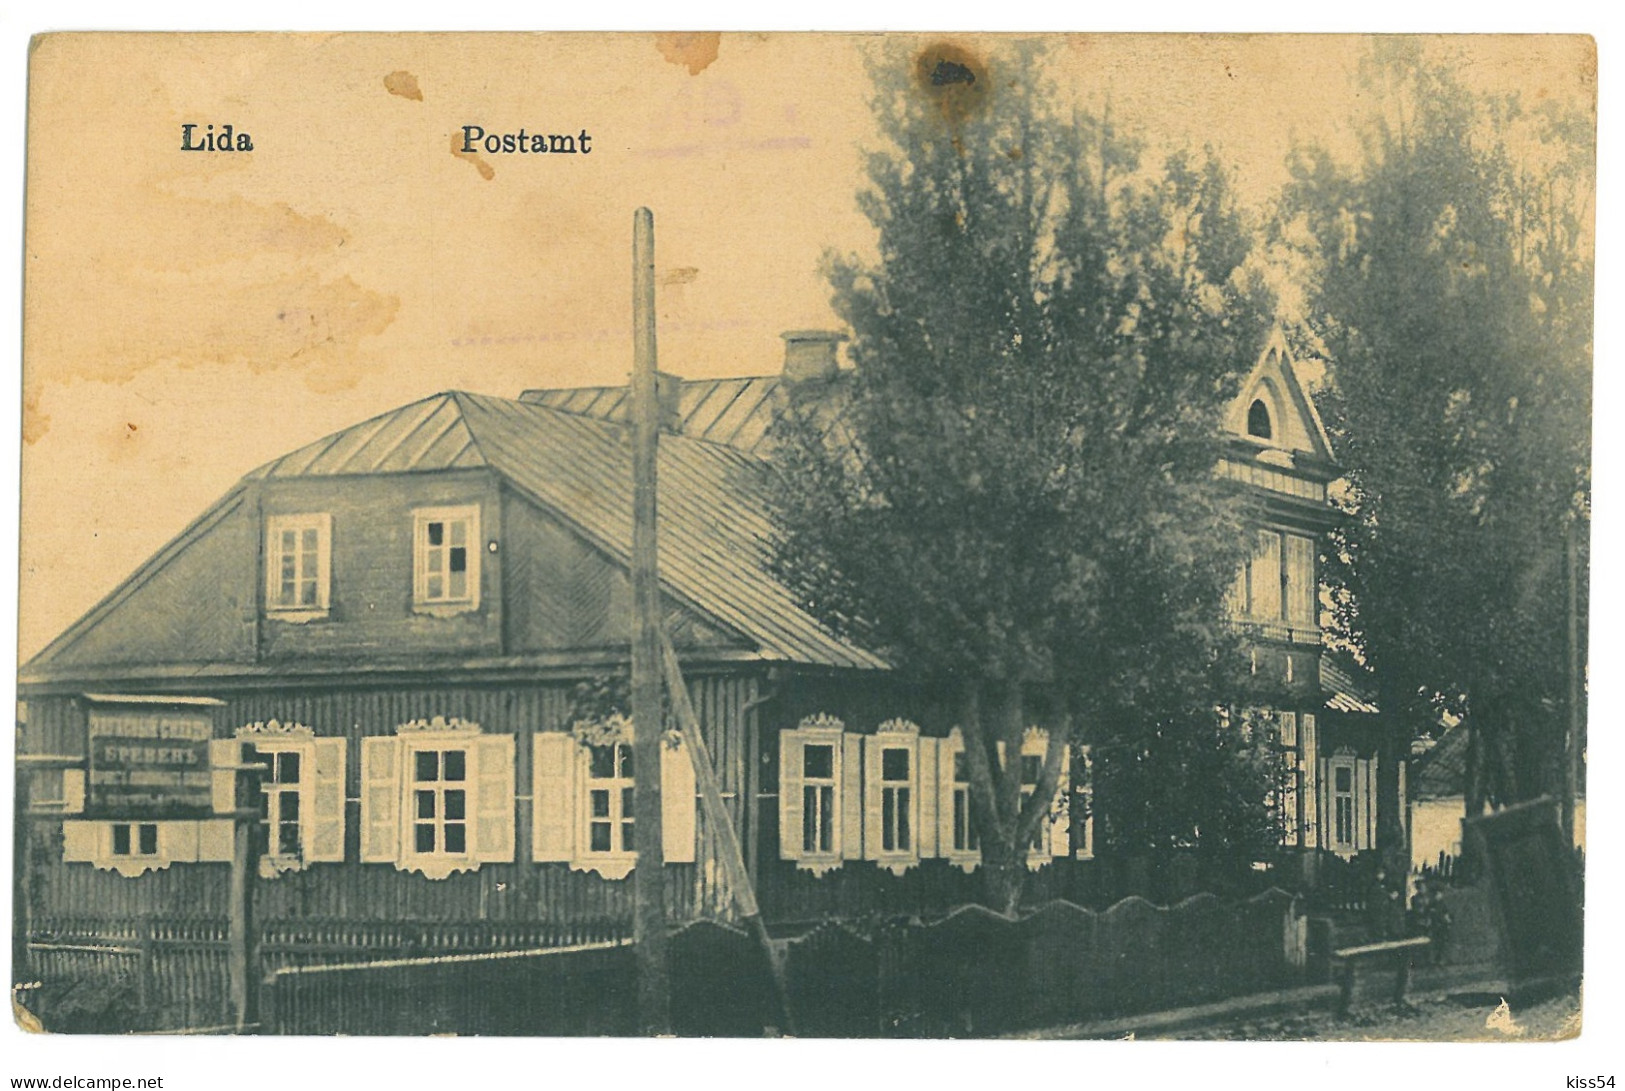 BL 29 - 24070 LIDA, Post Office, Belarus - Old Postcard - Used - 1917 - Belarus